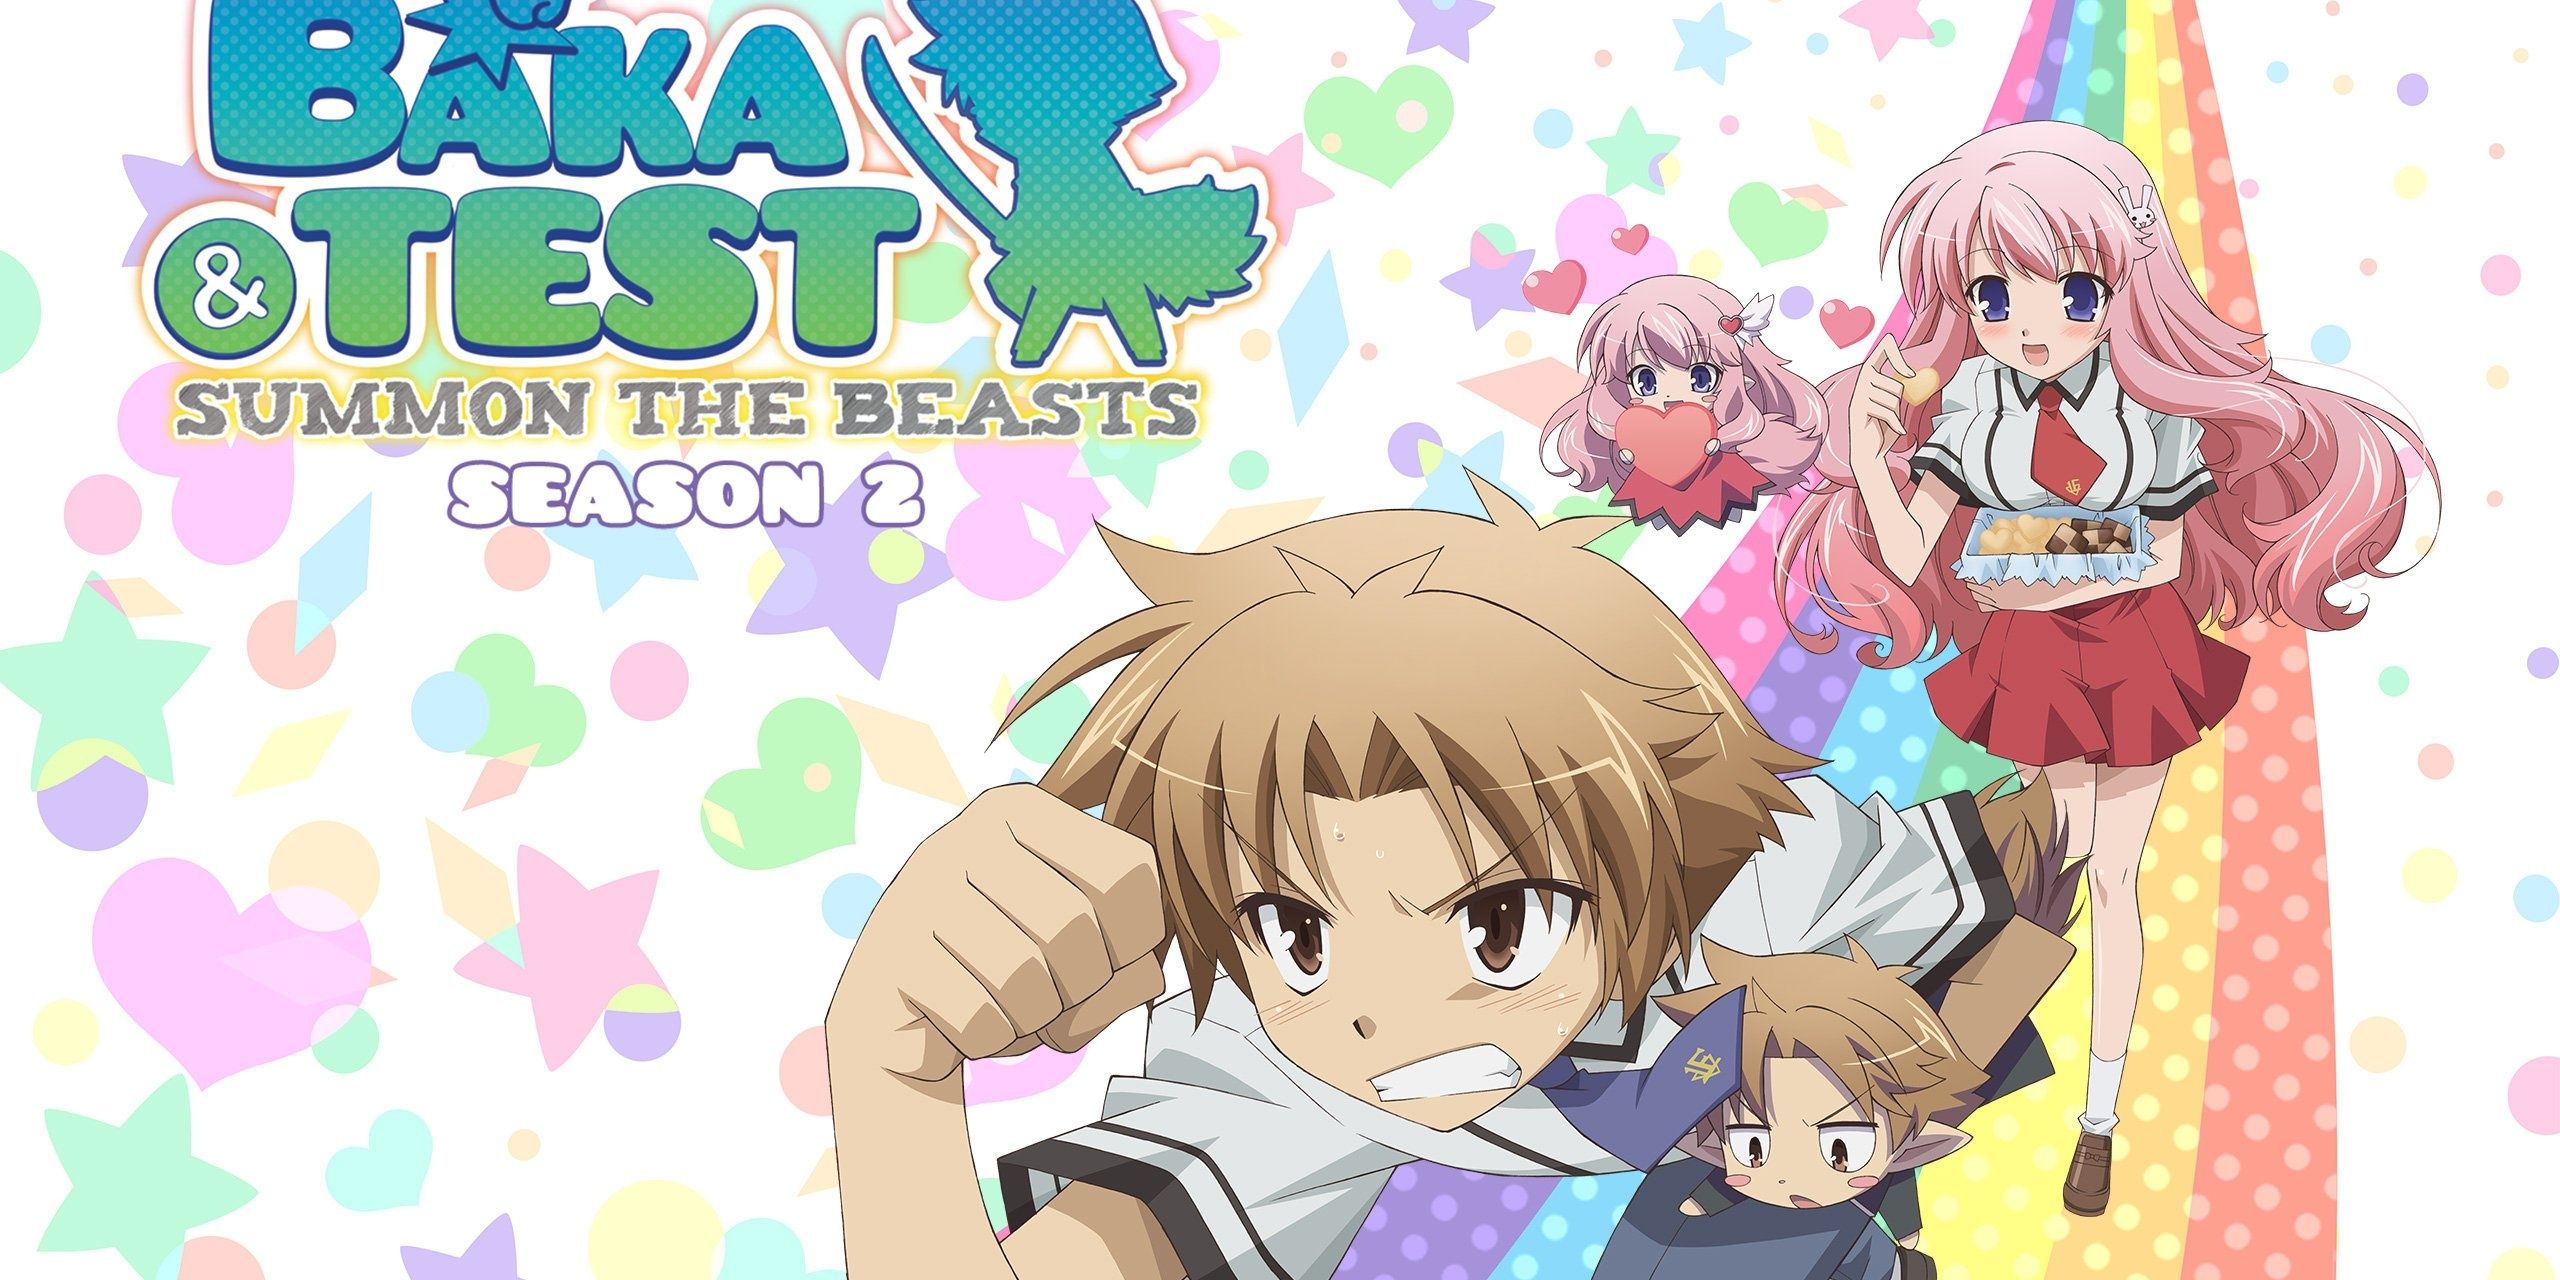 Baka and Test Summon The Beasts season 2 cover art